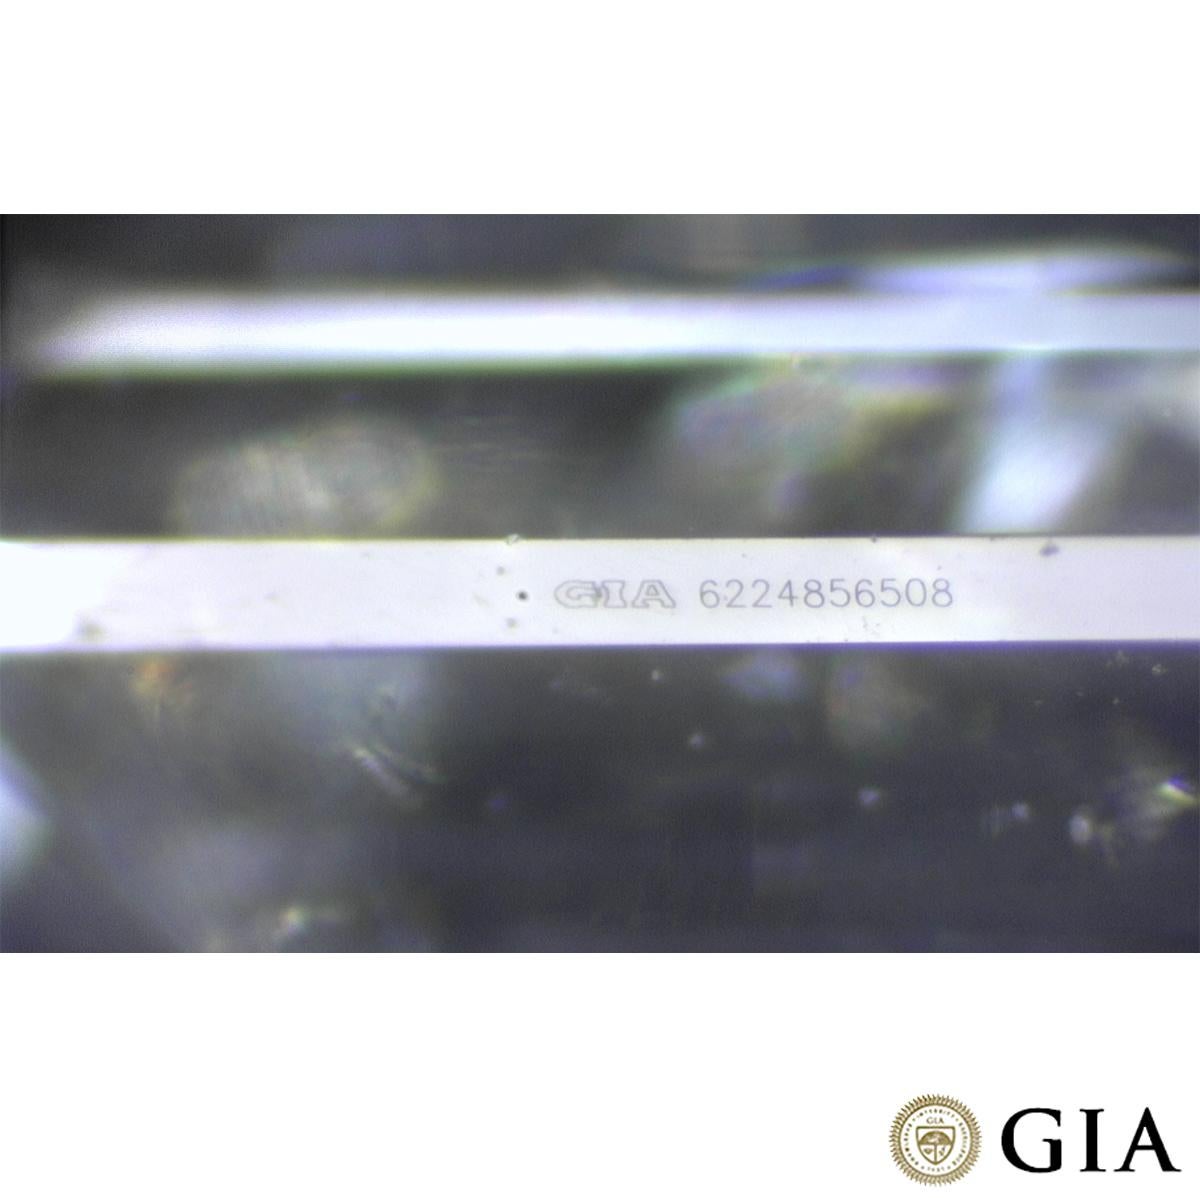 GIA Certified White Gold Emerald Cut Diamond Pendant 0.51 Carat F/VS1 For Sale 1